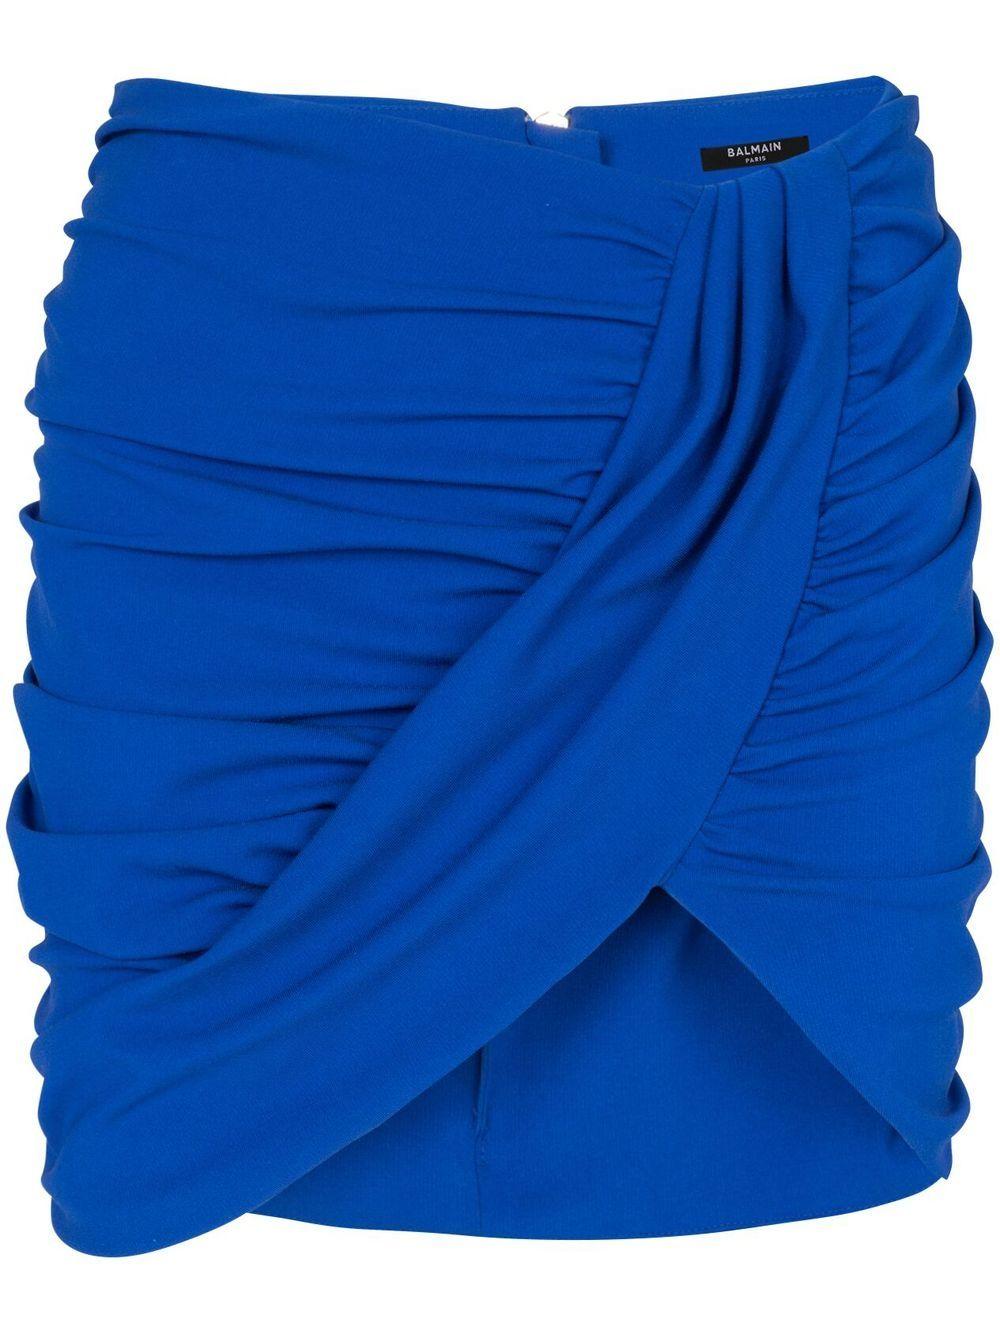 BALMAIN Navy Draped Elasticated Skirt for Women - SS23 Collection